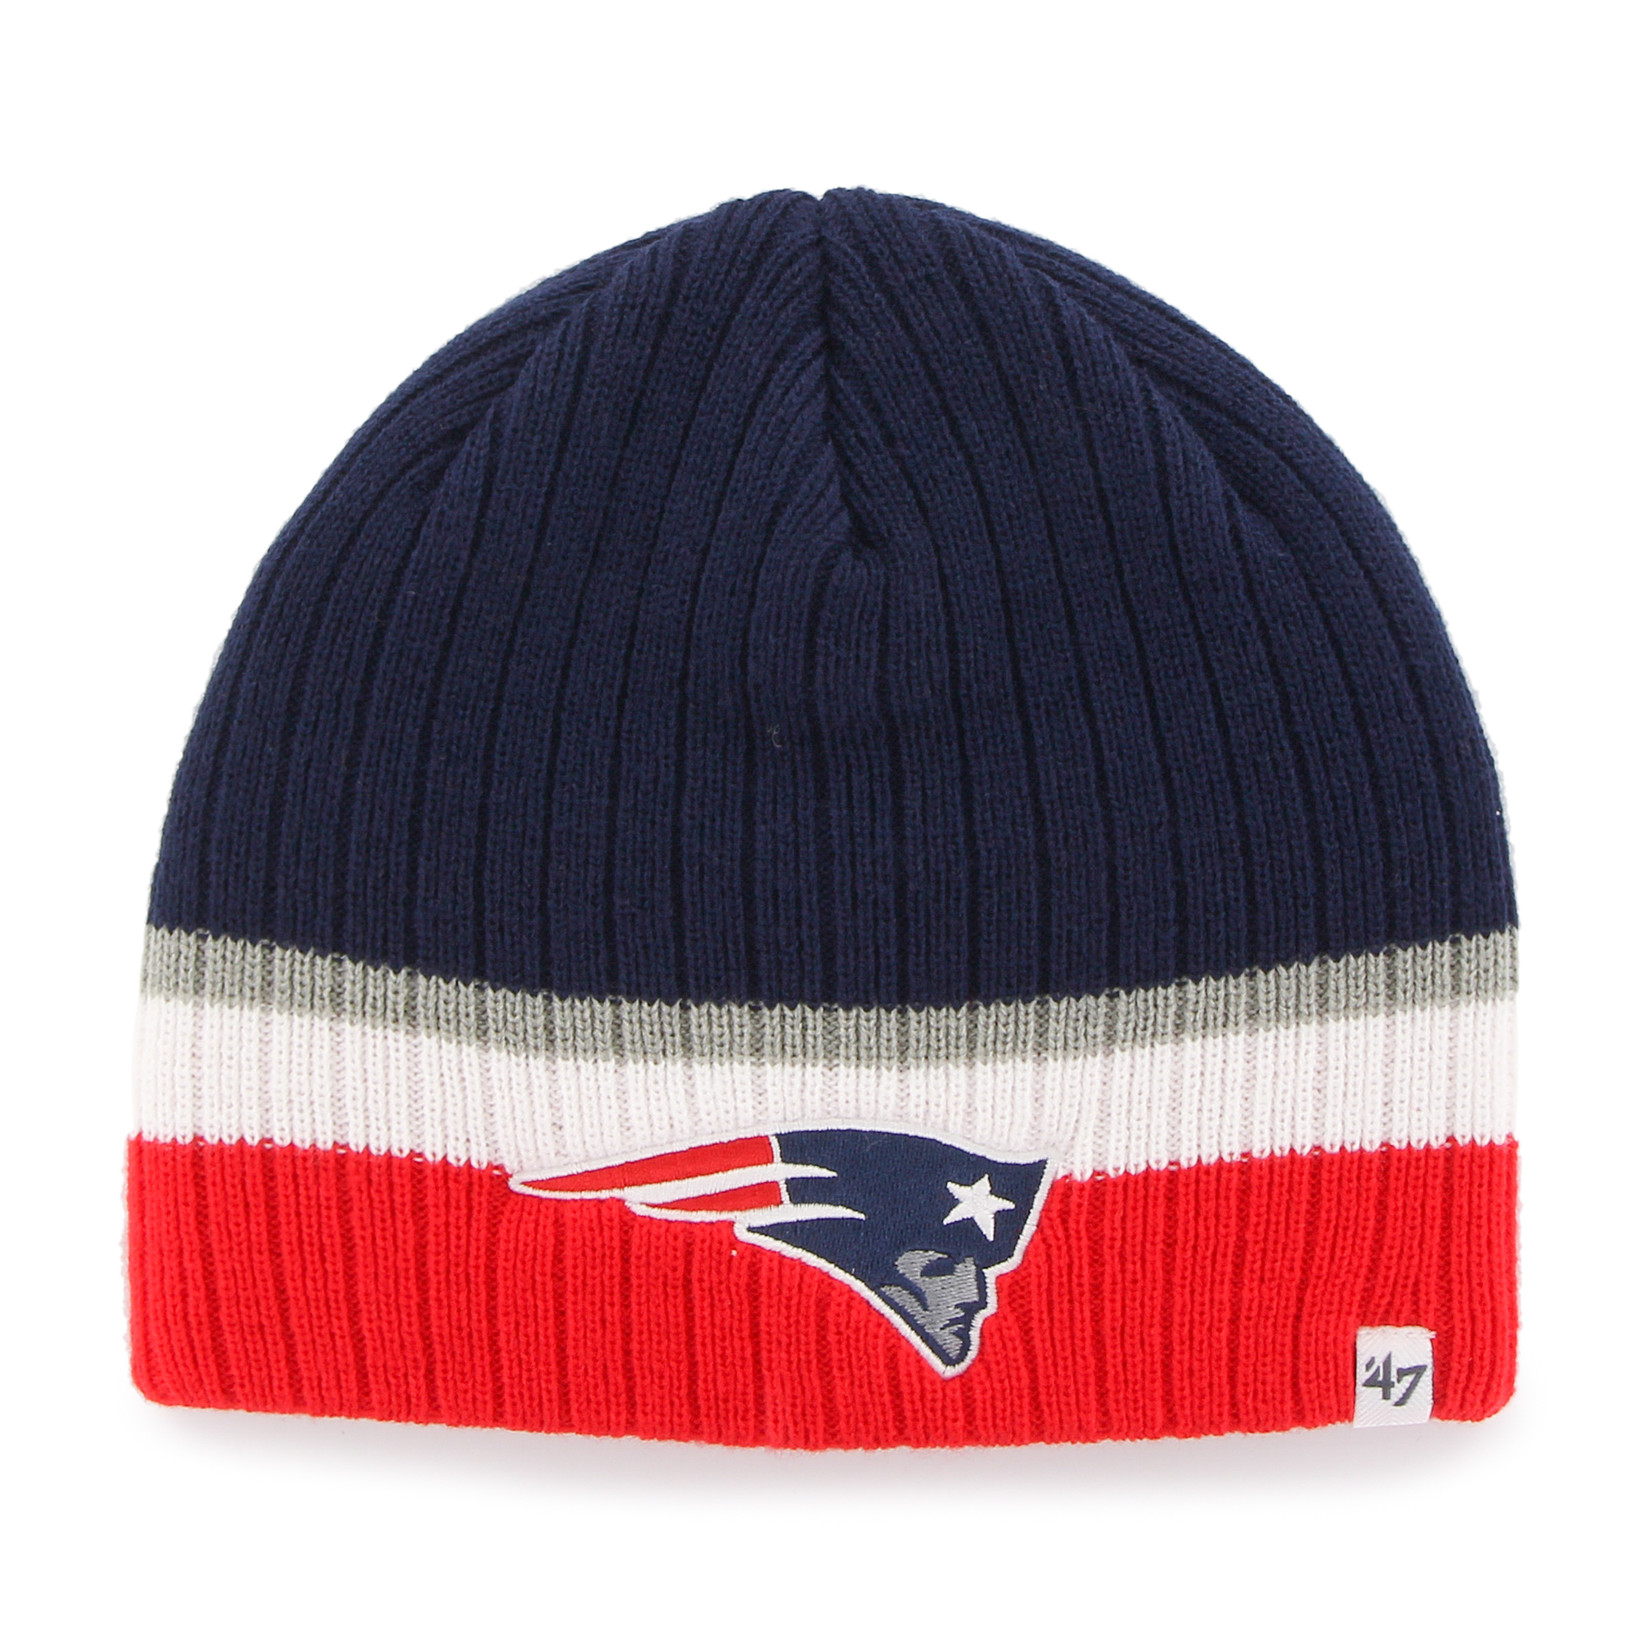 '47 Brand Patriots Winter Hat - Youth